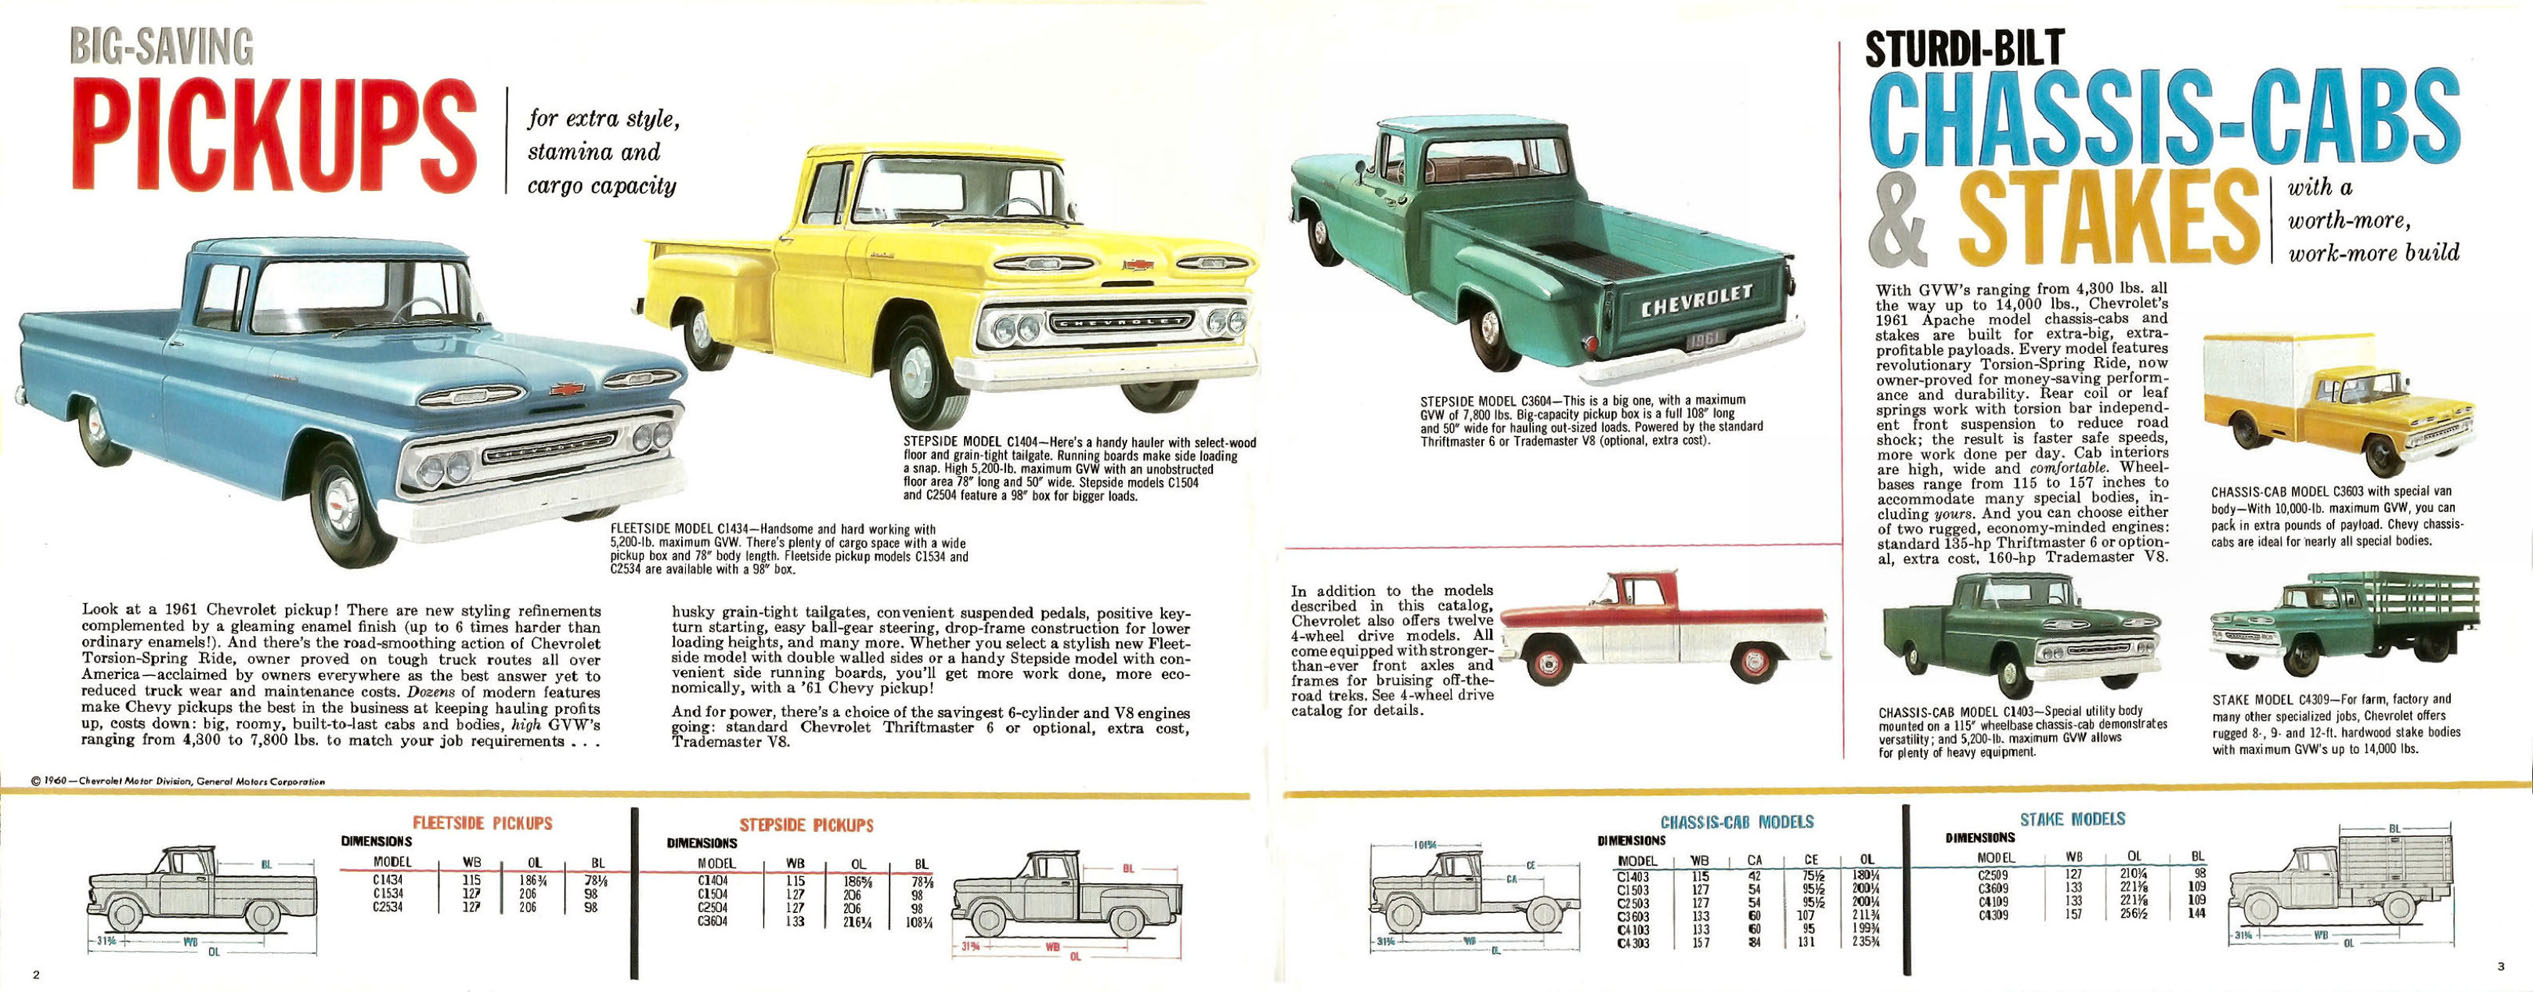 Пикап читать. Chevrolet Pickup 1961. Пикап чертеж. Пикап продажи книга. Chevy Stepside Pickup 1965 7210 салон.